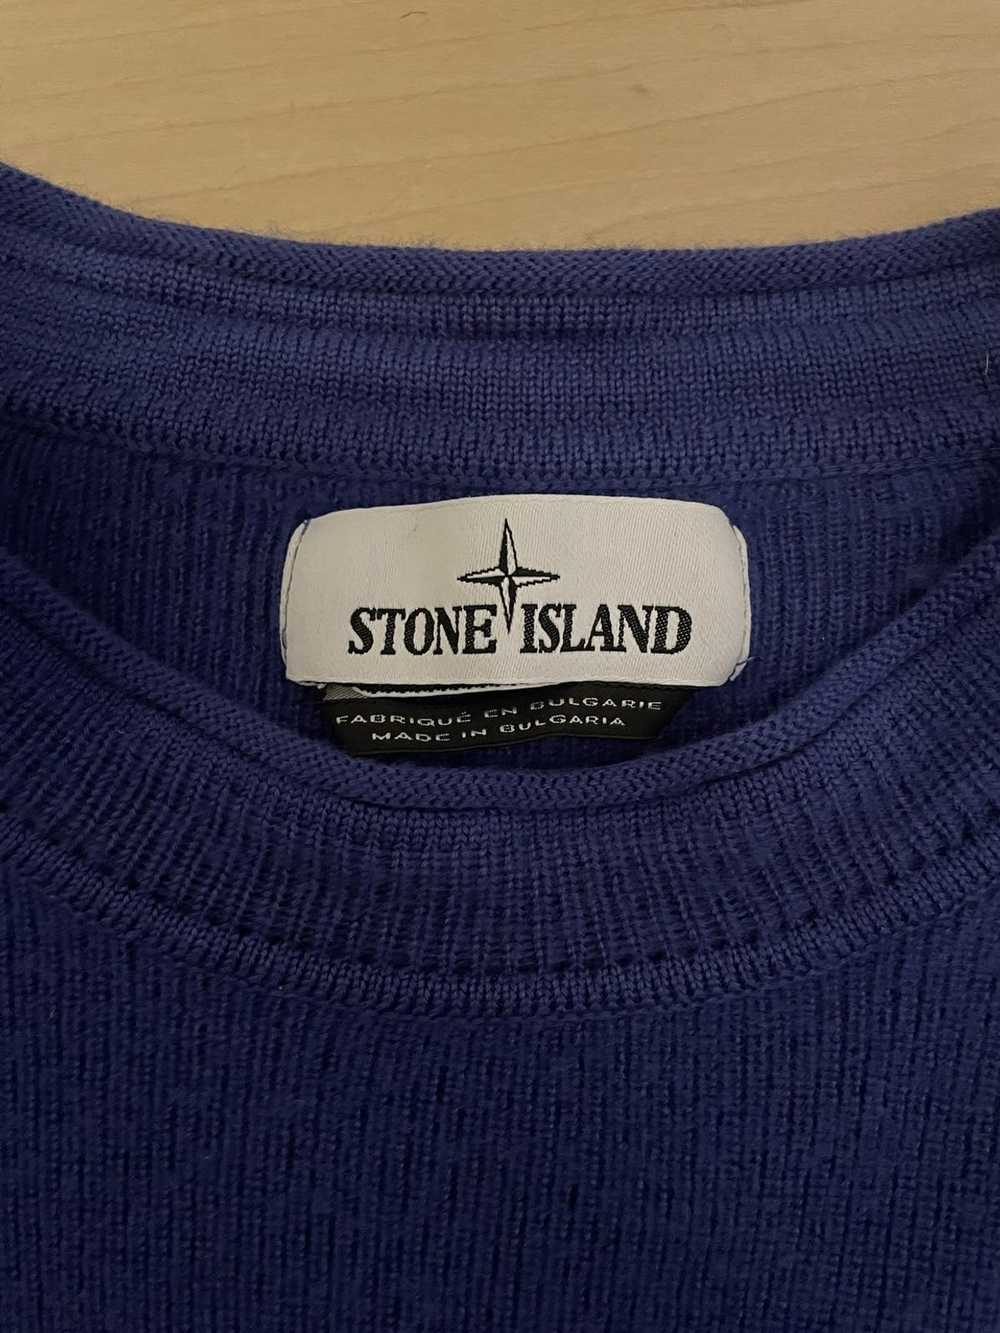 Stone Island Stone Island knit sweater - image 2